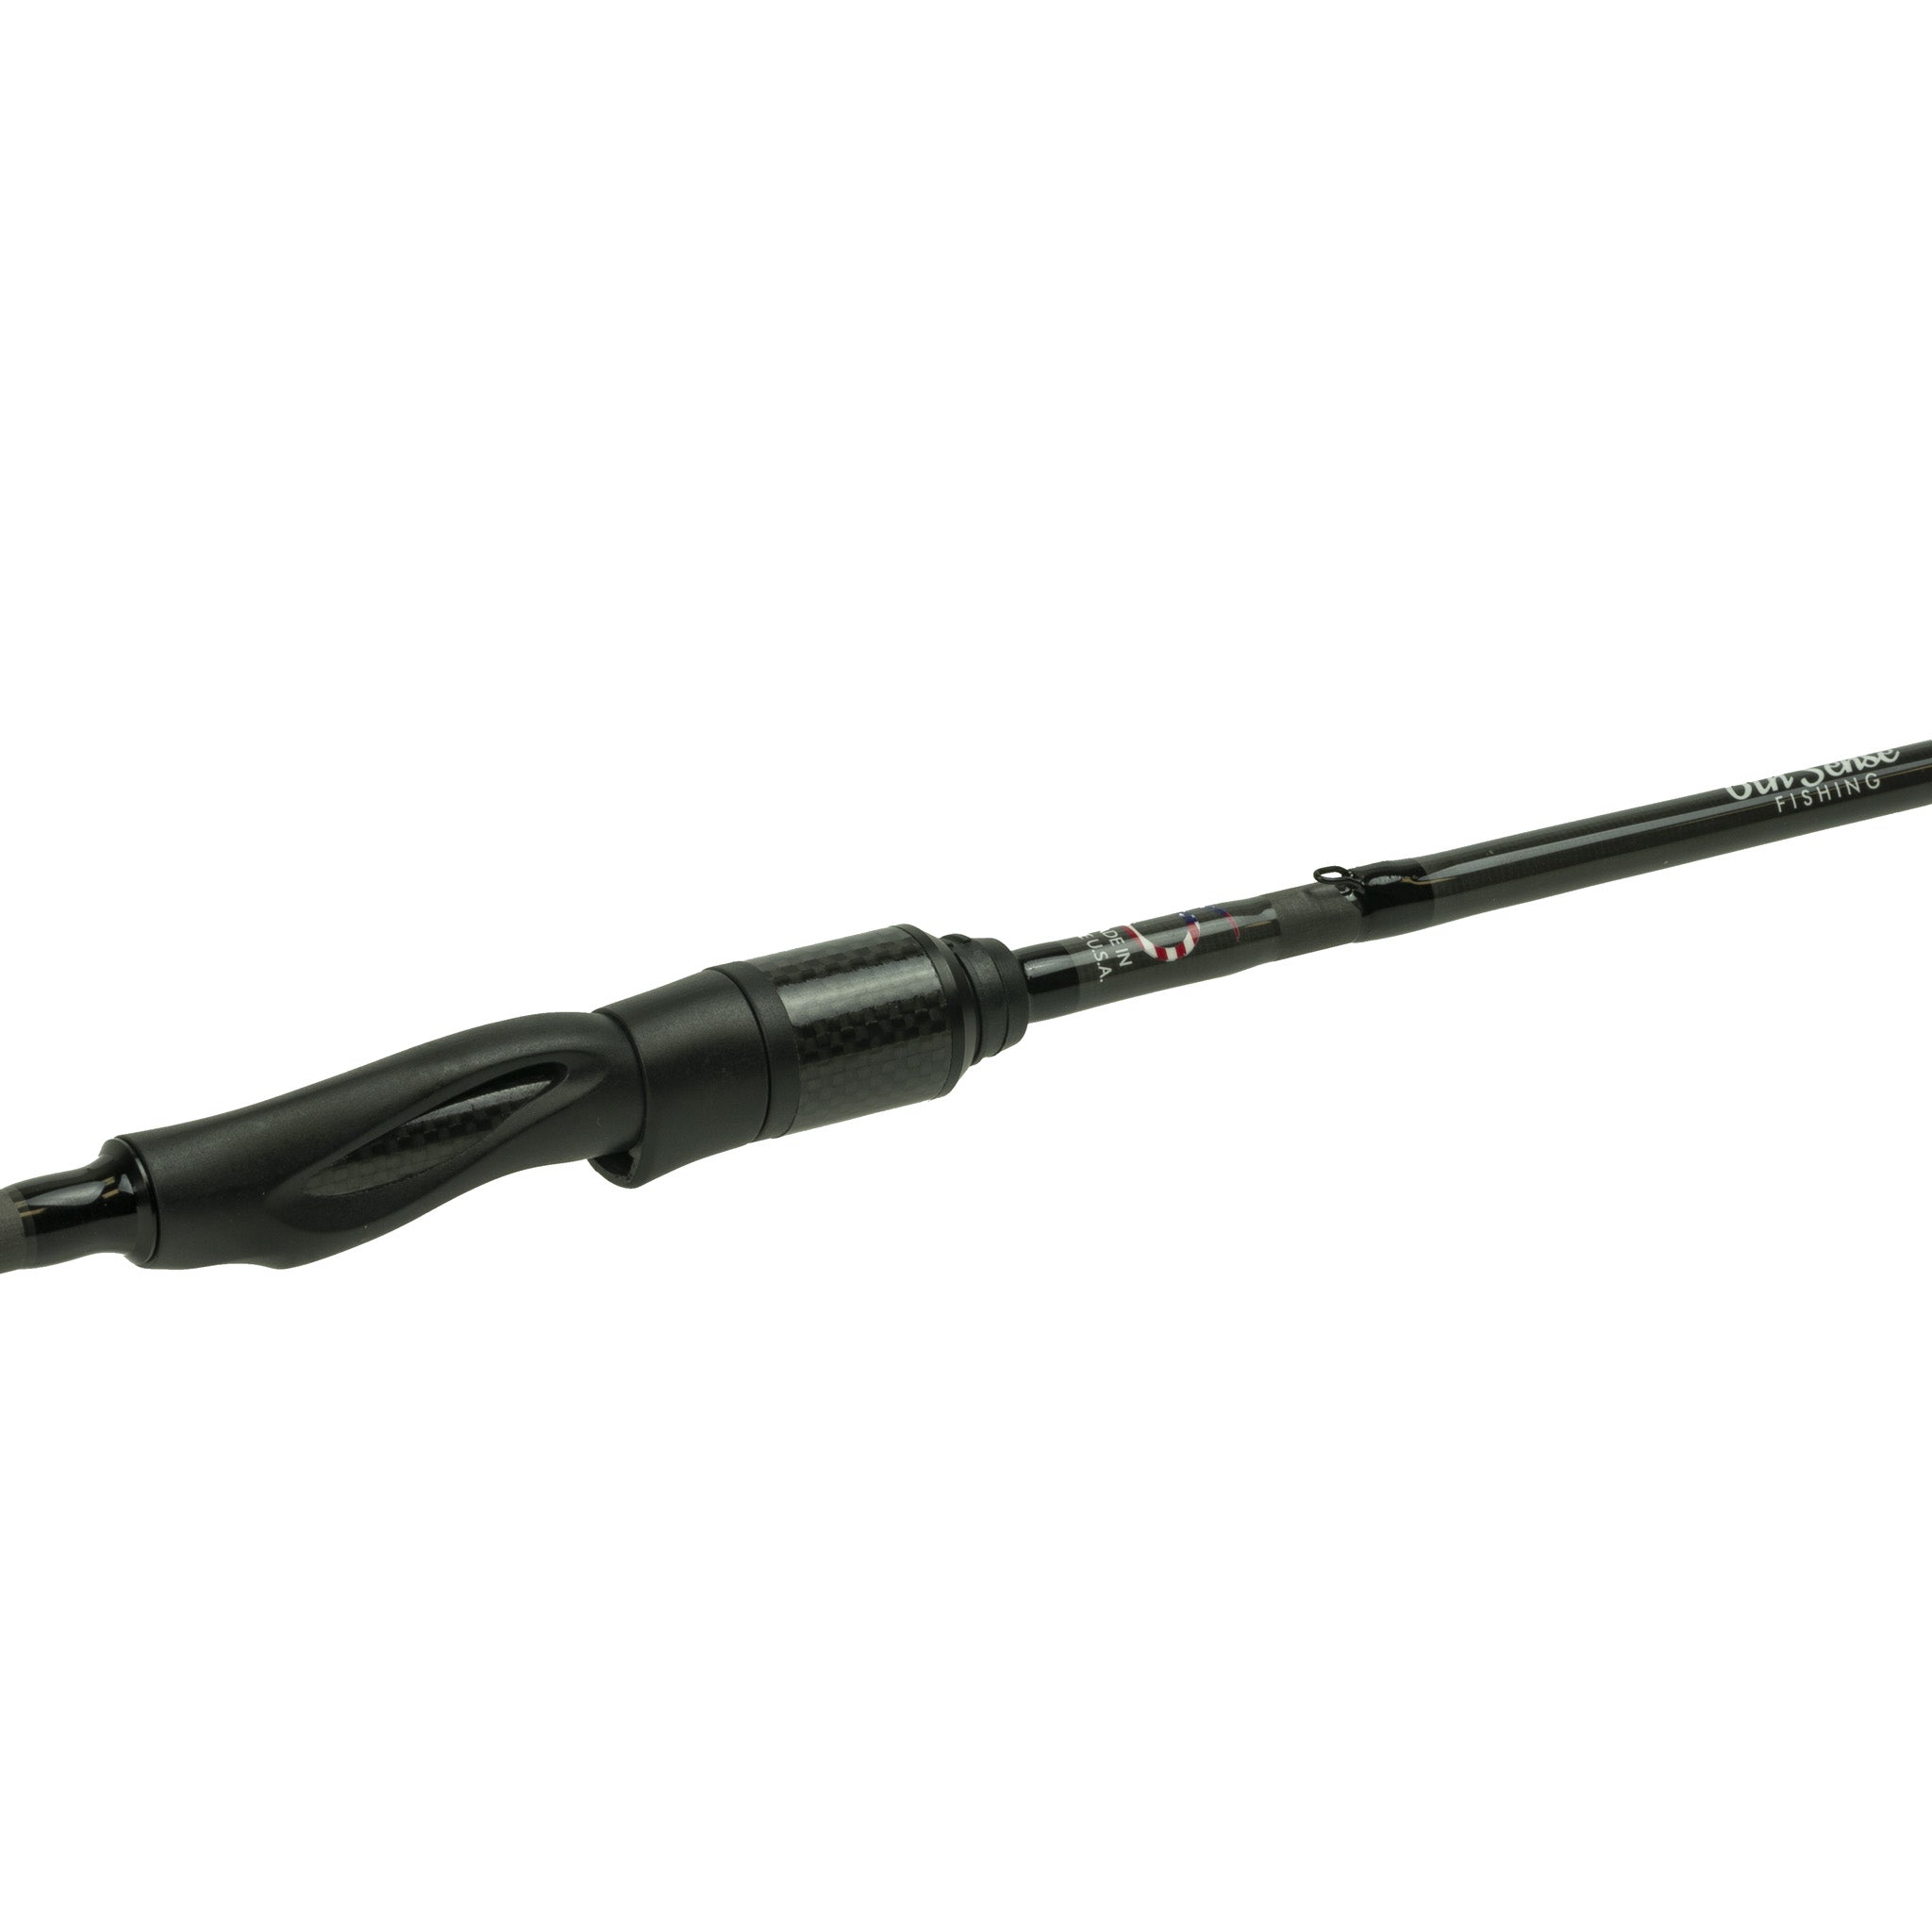 6th Sense Fishing ESP Rod 7'3 Medium-Light, Moderate (Spinning Rod)